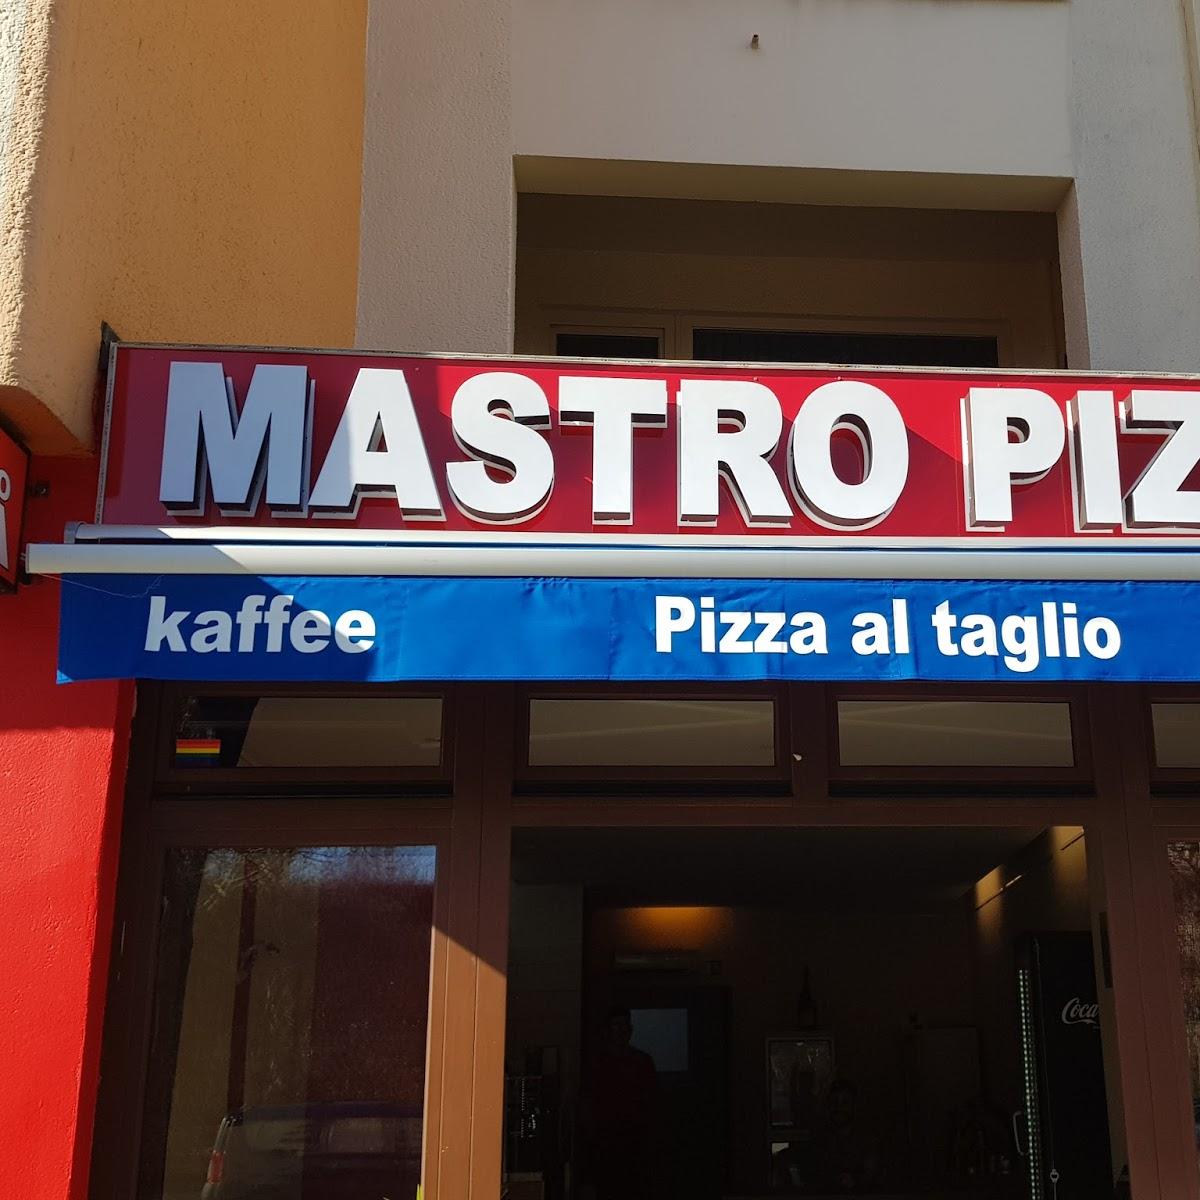 Restaurant "Mastro Pizza" in Berlin